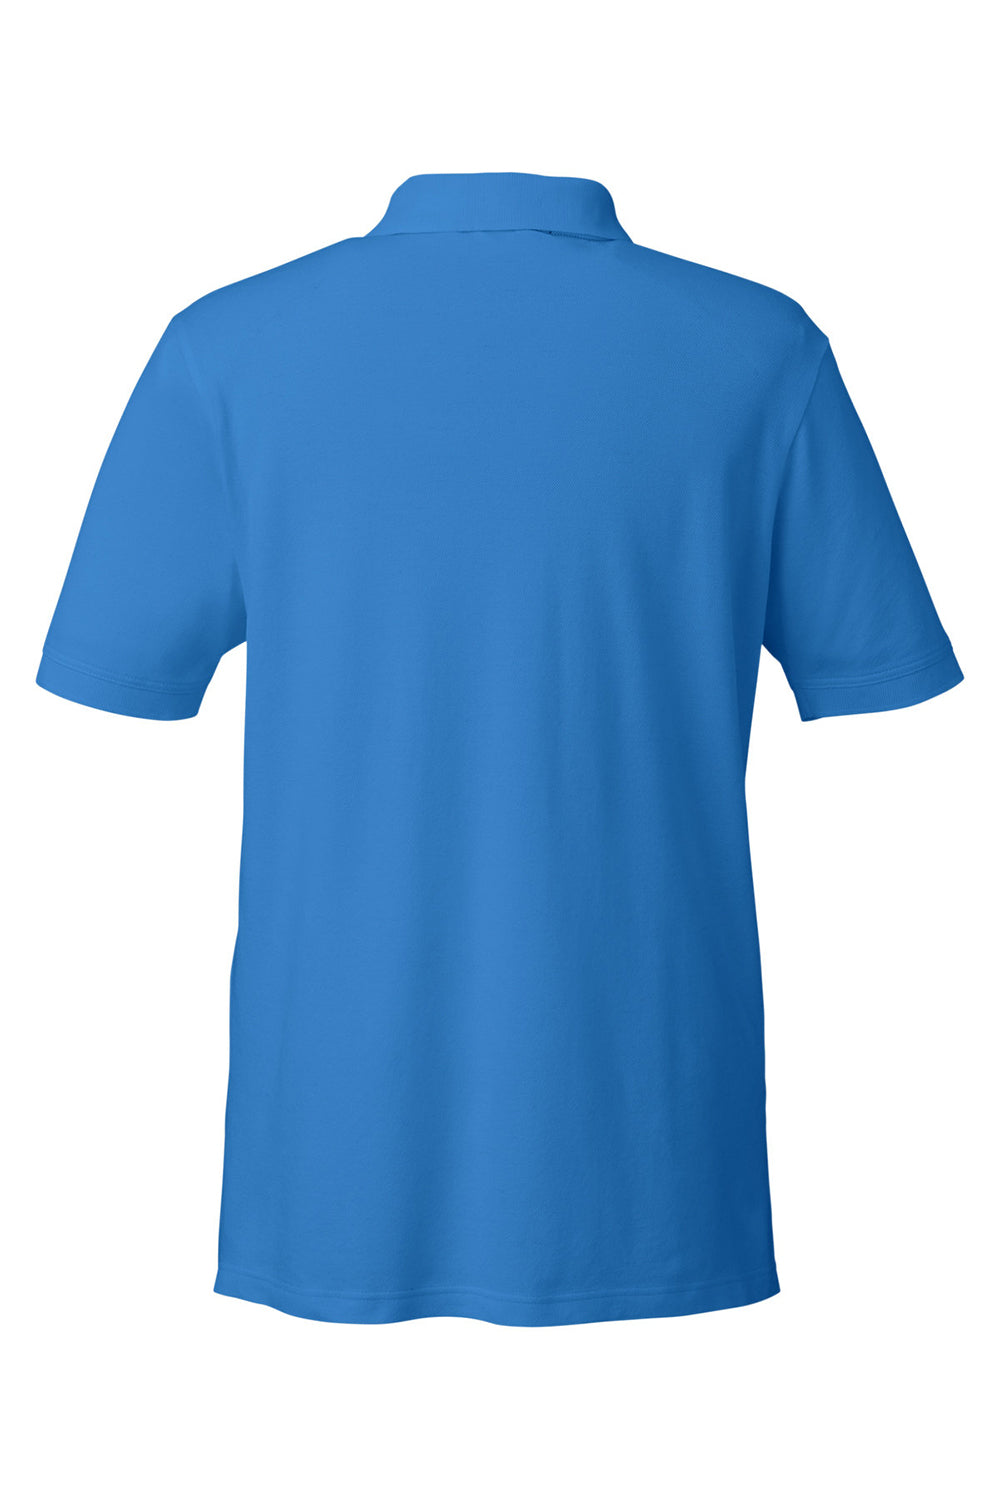 Devon & Jones DG100 Mens New Classics Performance Moisture Wicking Short Sleeve Polo Shirt French Blue Flat Back